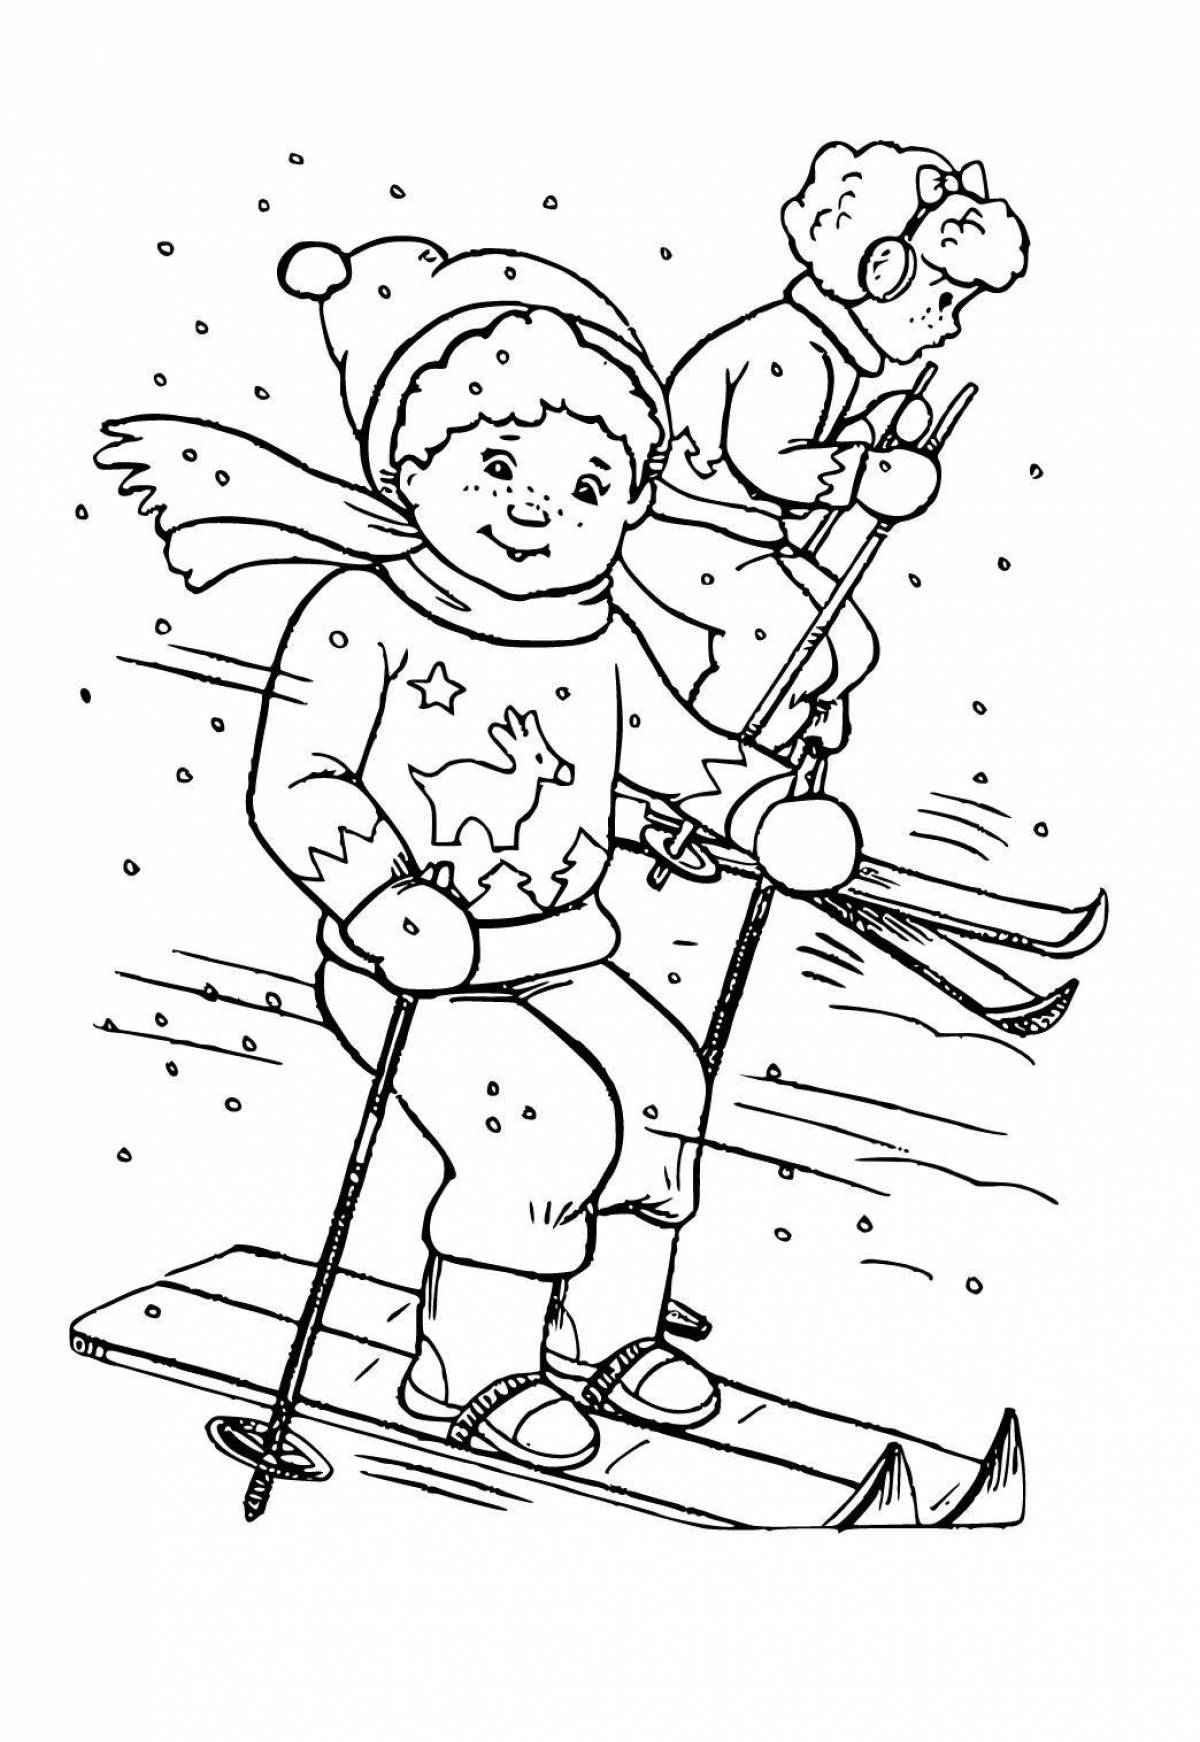 Fun skier coloring for kids